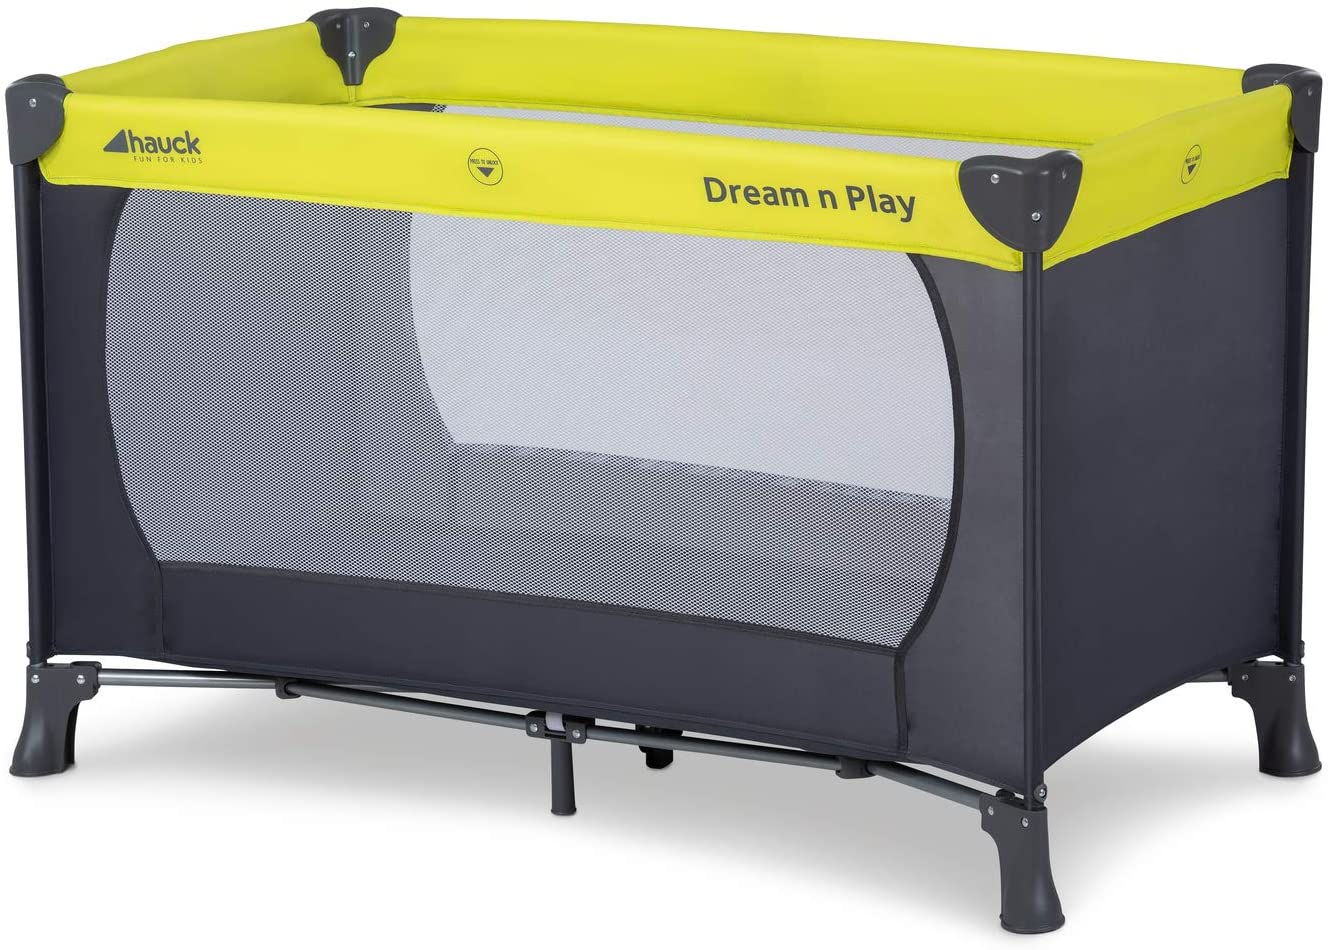 hauck dream n play travel cot mattress size